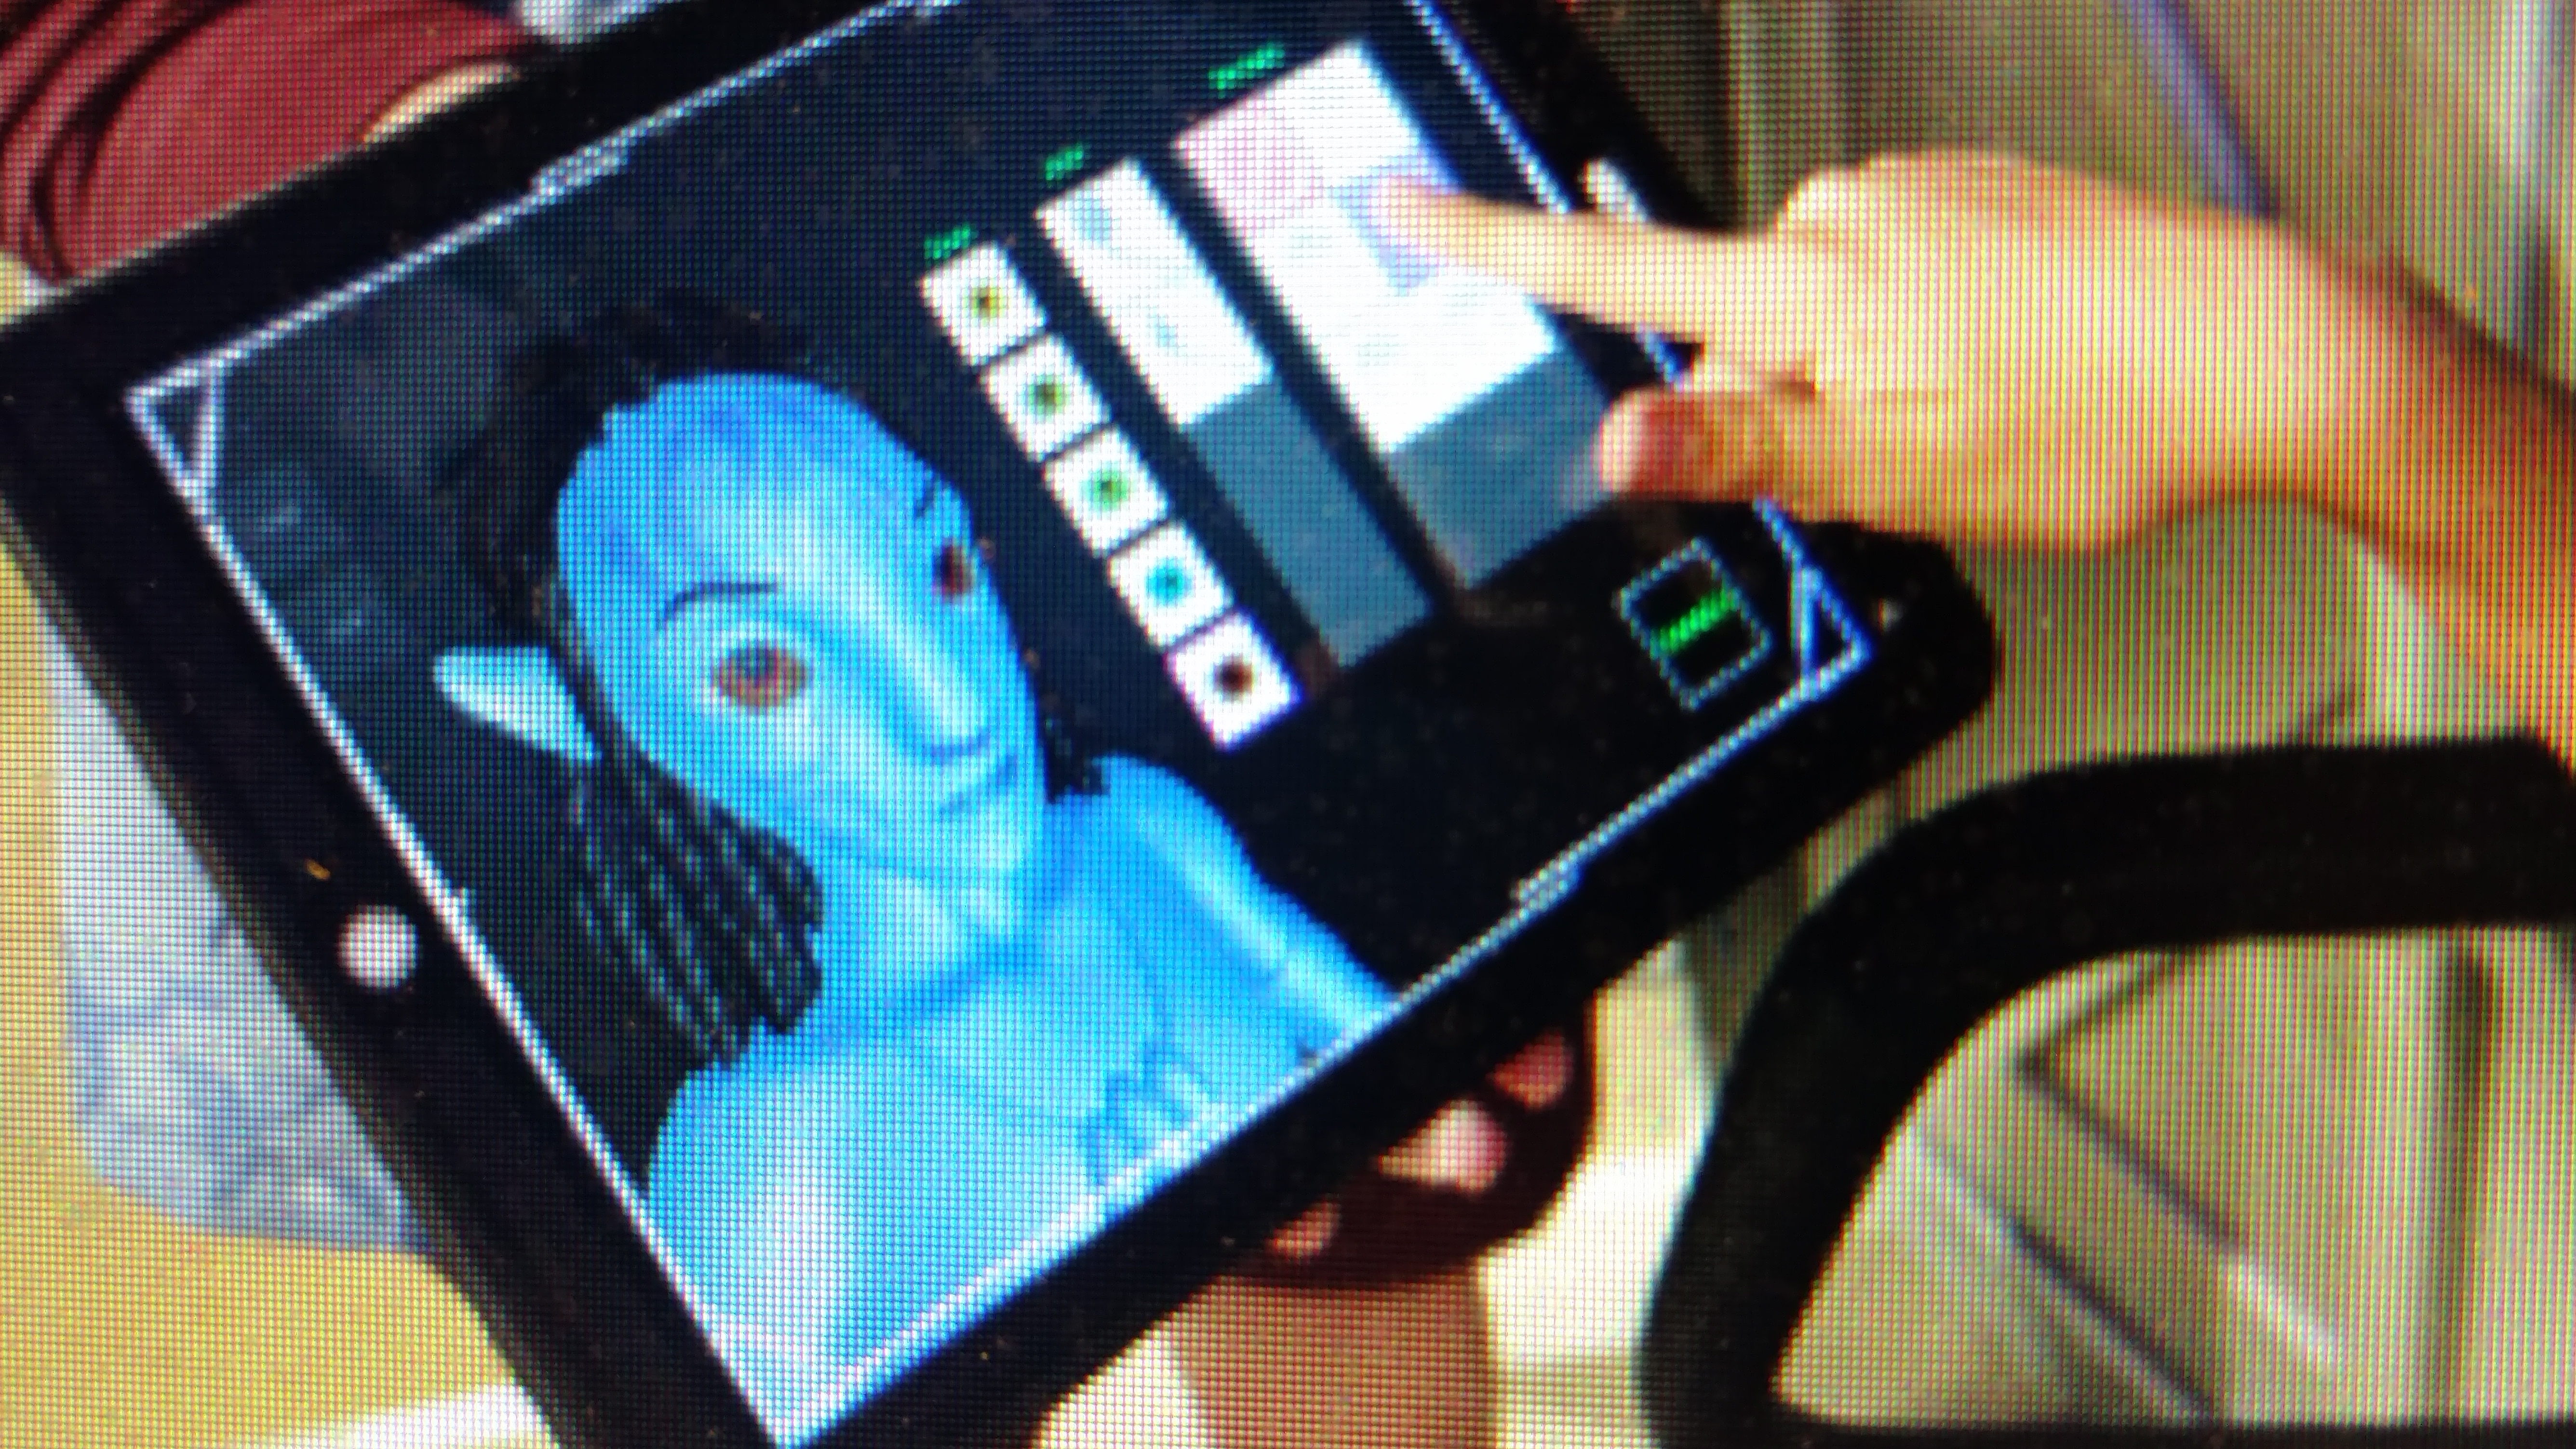 Avatar Maker at Disney Pandora World of Avatar -Toddler Becomes a Navi  Action Figure! 